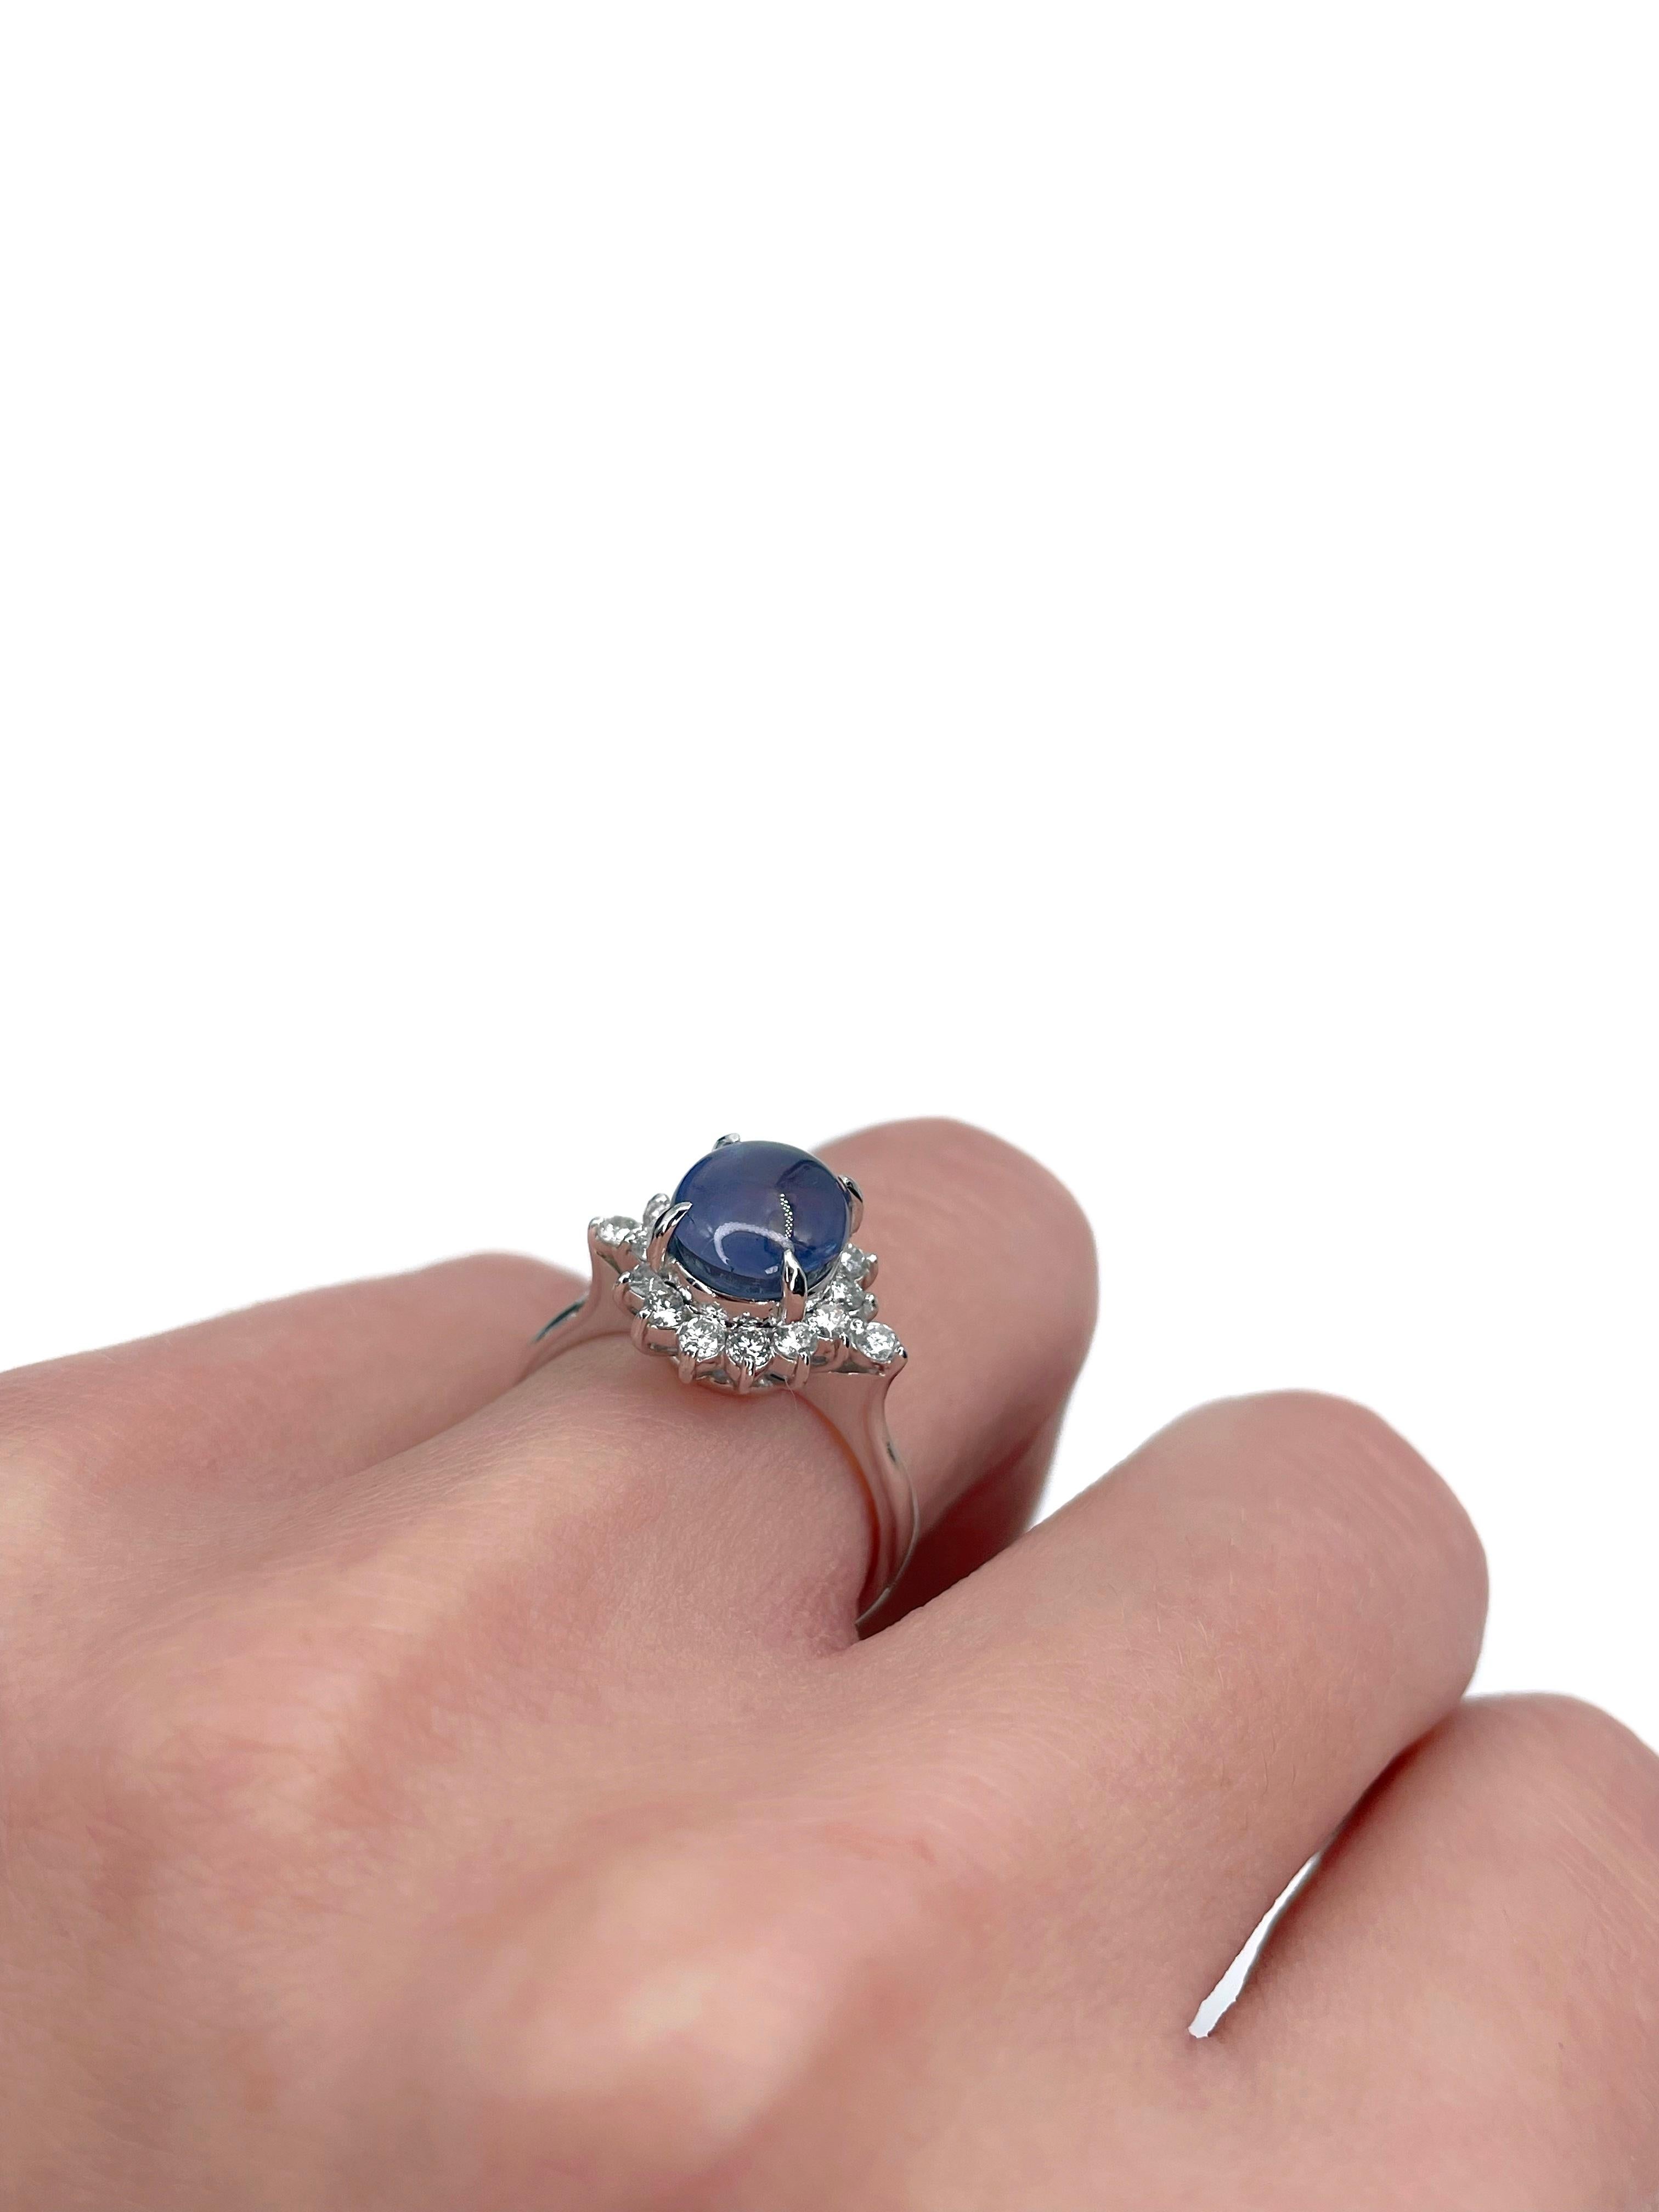 Women's Modern 900 Platinum 2.30 Carat Violet Sapphire 0.35 Carat Diamond Cluster Ring For Sale